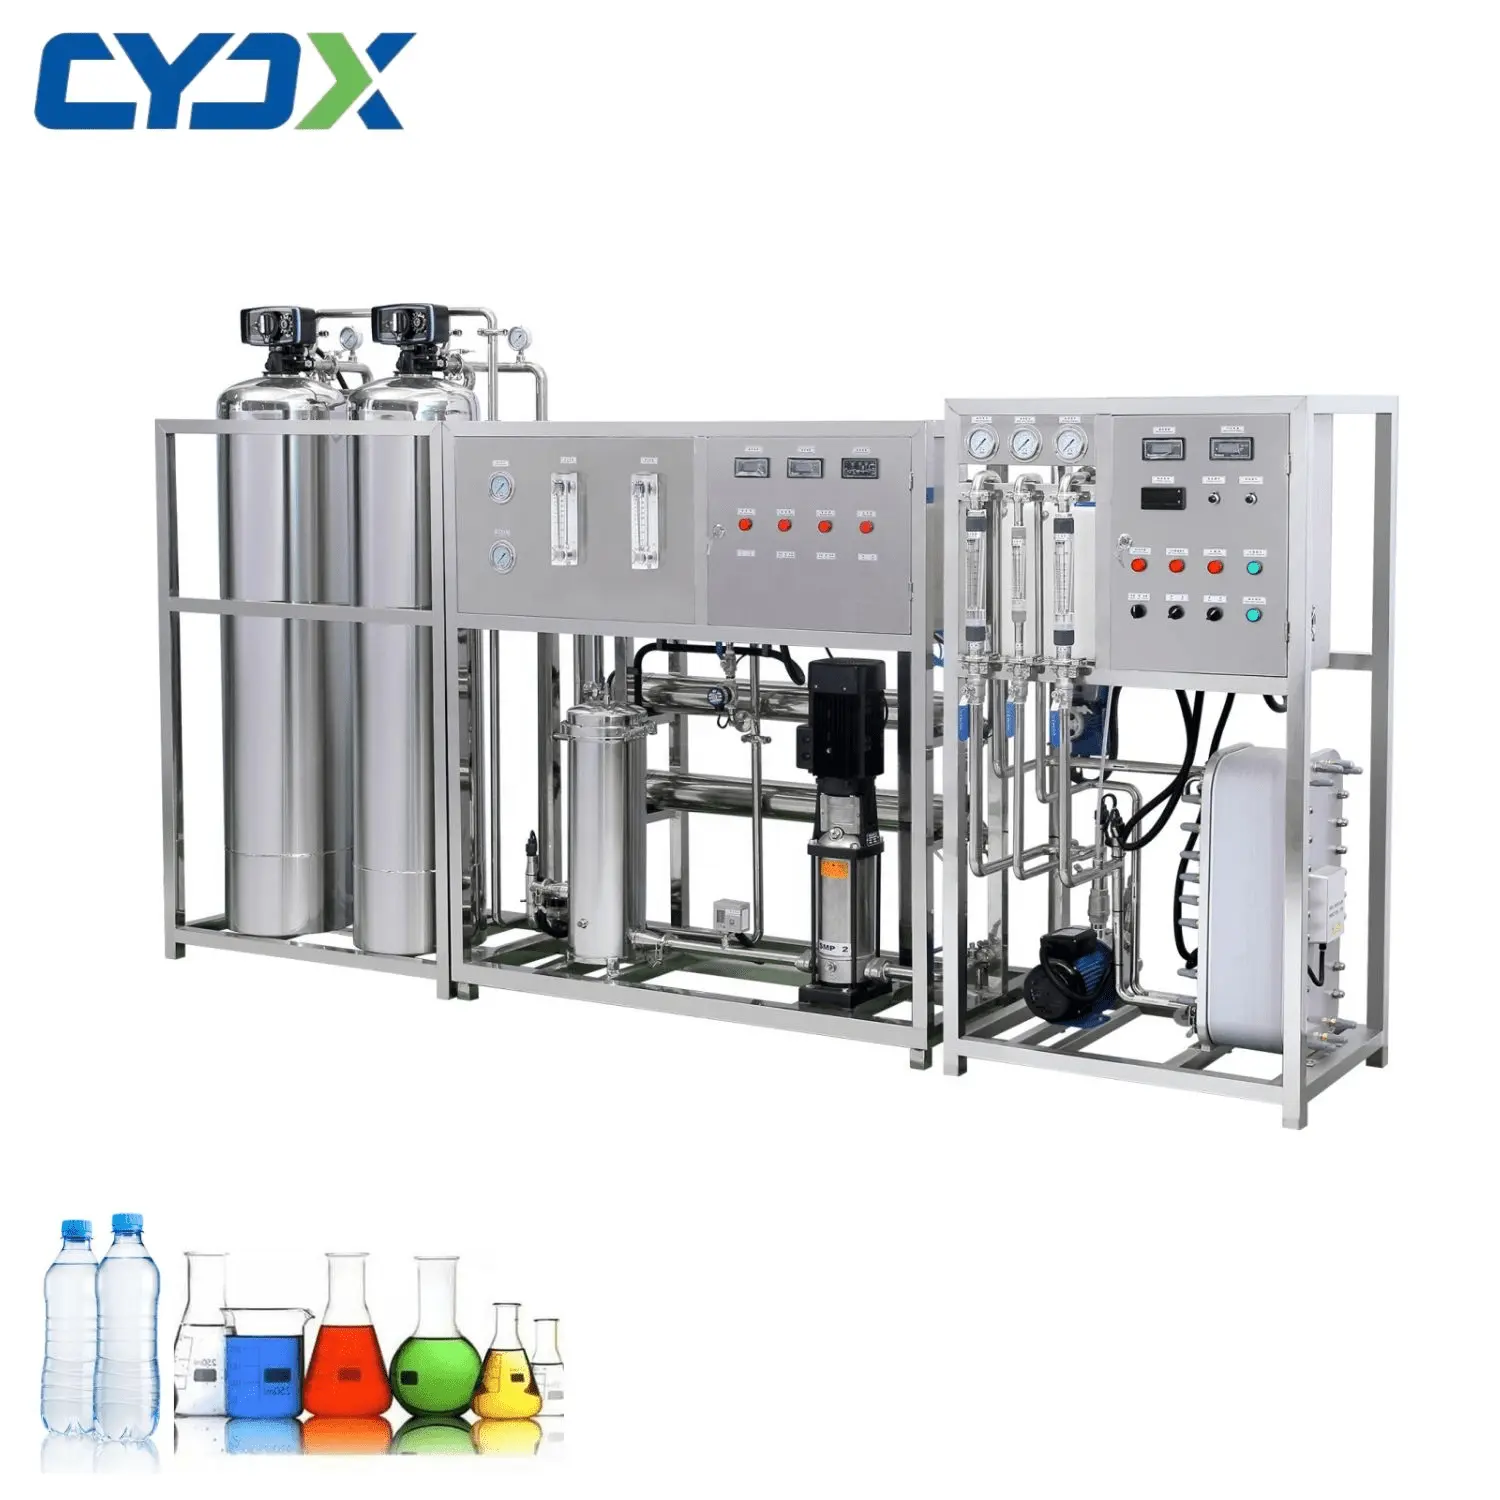 CYJX 좋은 가격 5000 LPH 산업 자동 RO 시스템 판매를 위한 작은 생수 처리 공장